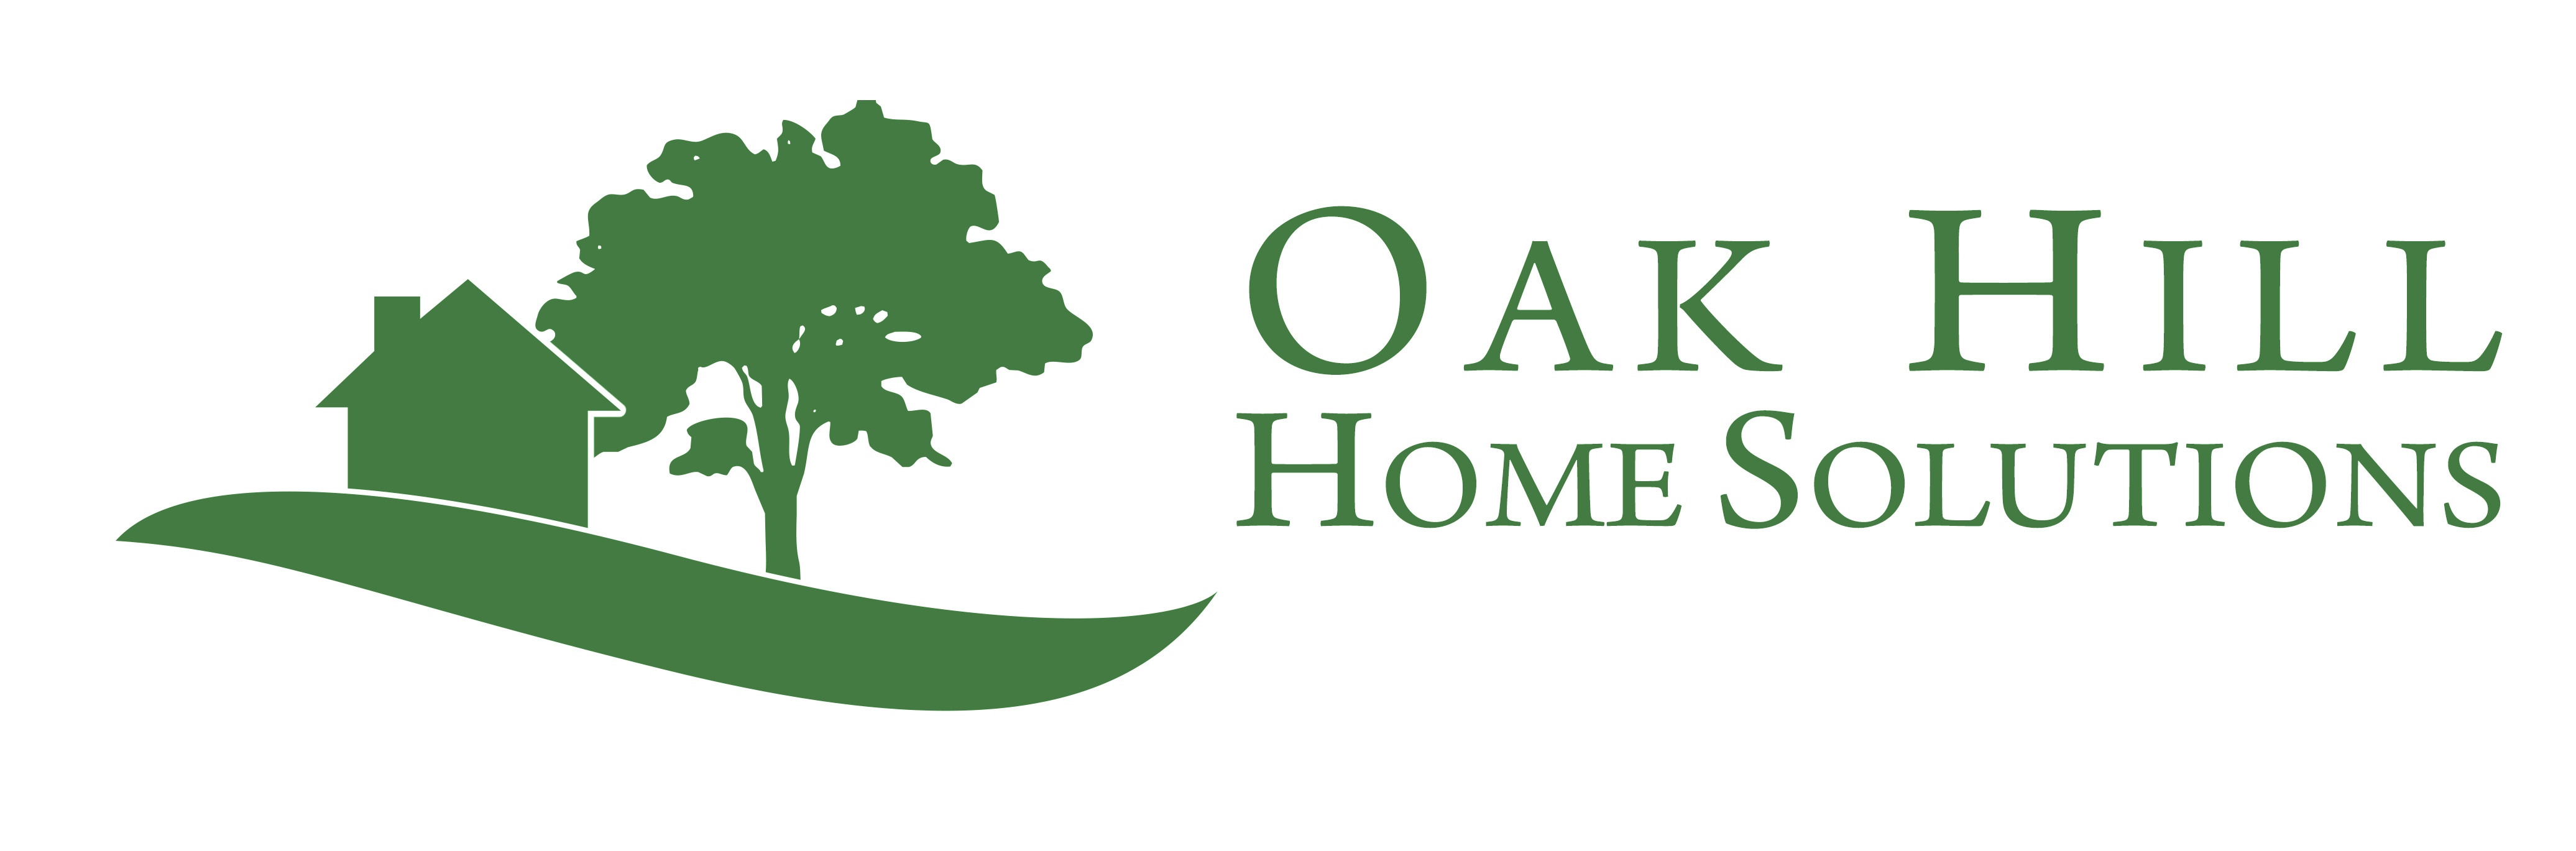 Oak Hill Home Solutions